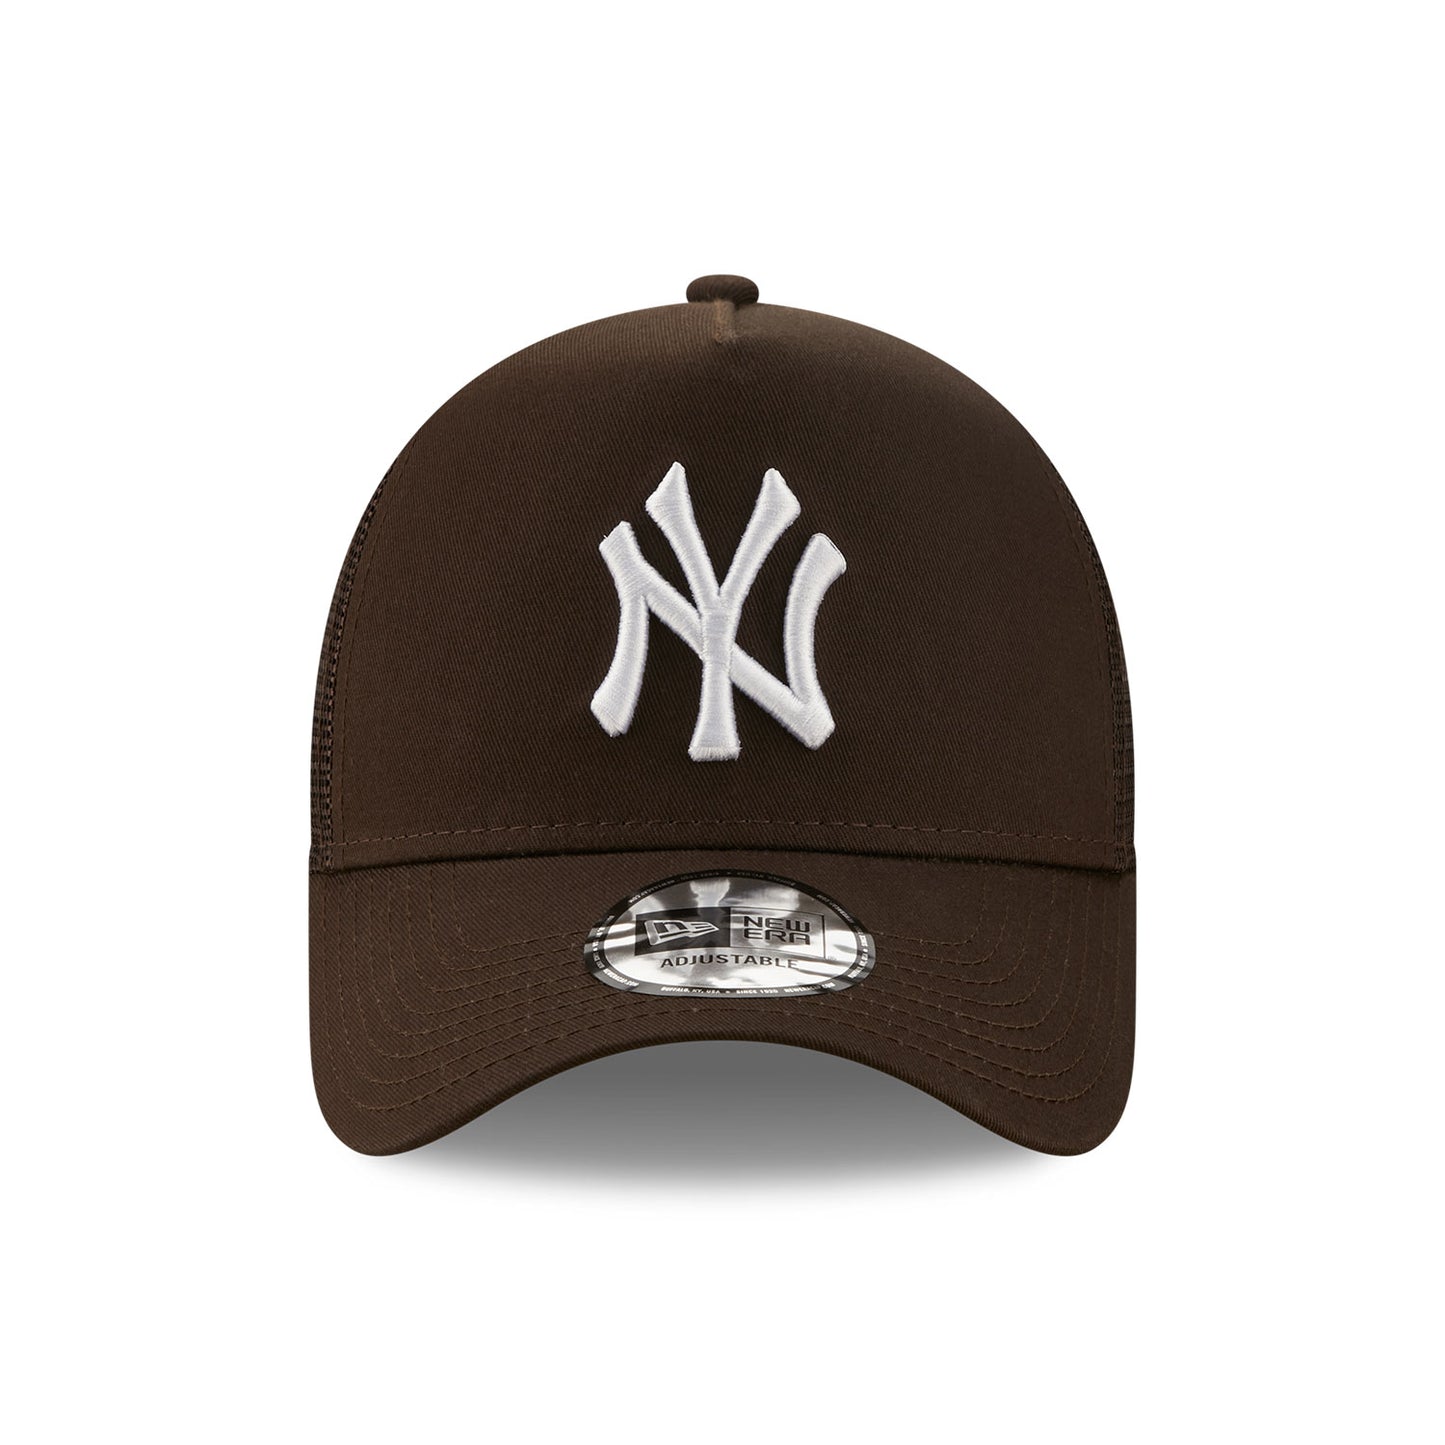 New York Yankees New Era Trucker Cap Adjustable brown